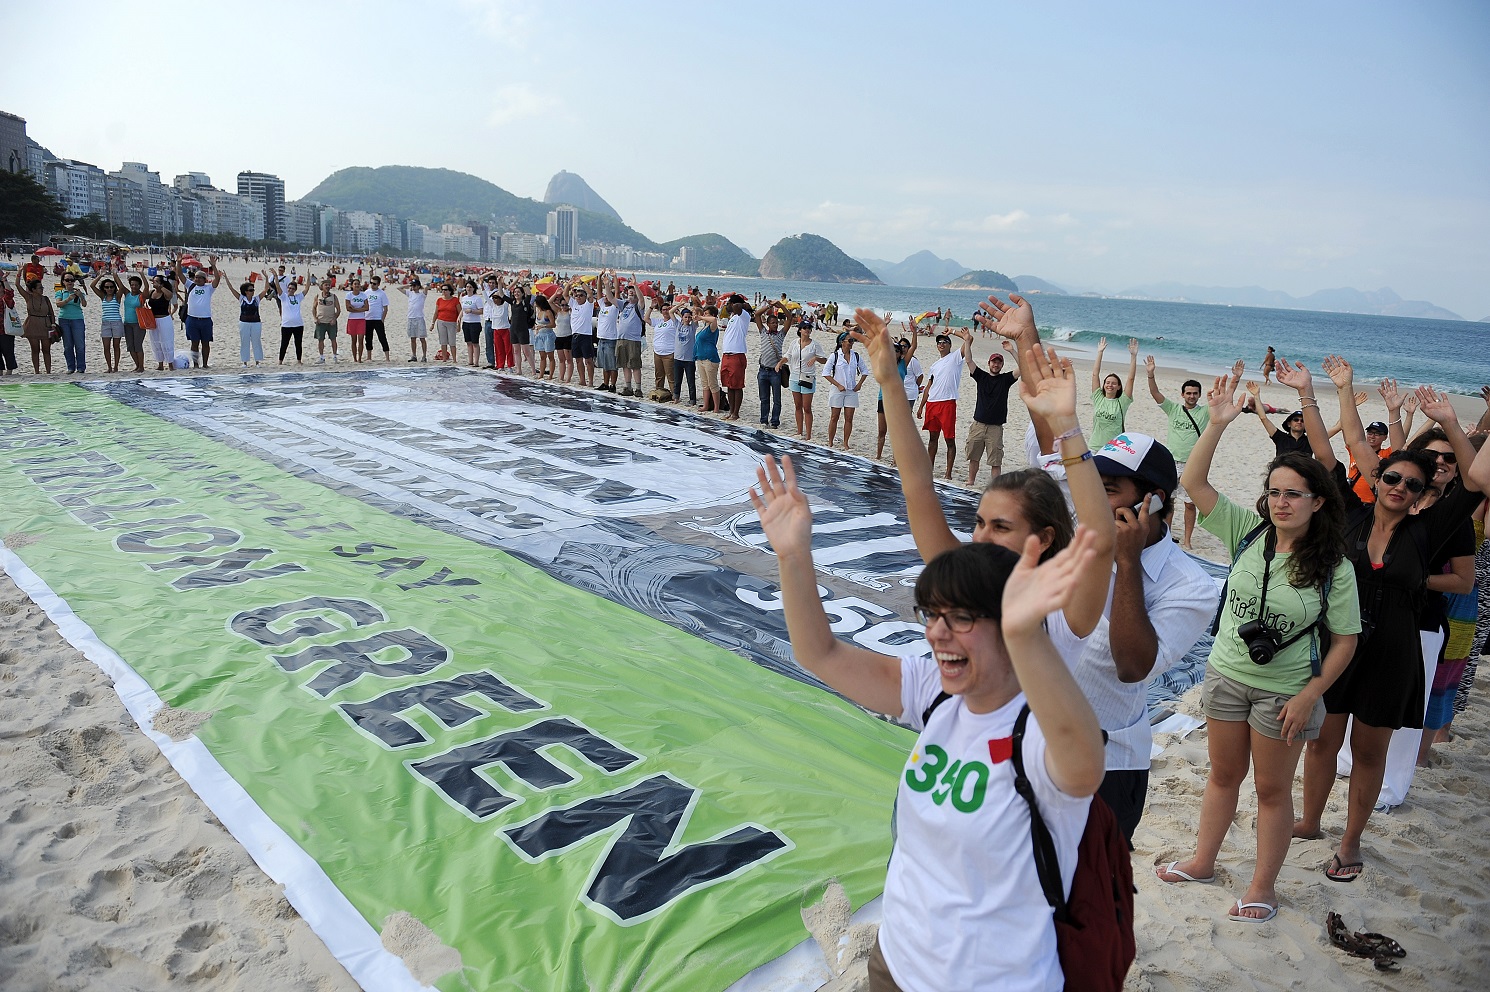 Manifestantes na praia de Copacabana protestam contra os subsídios aos combustíveis fósseis durante a Rio+20. Foto Vanderlei Almeida/AFP